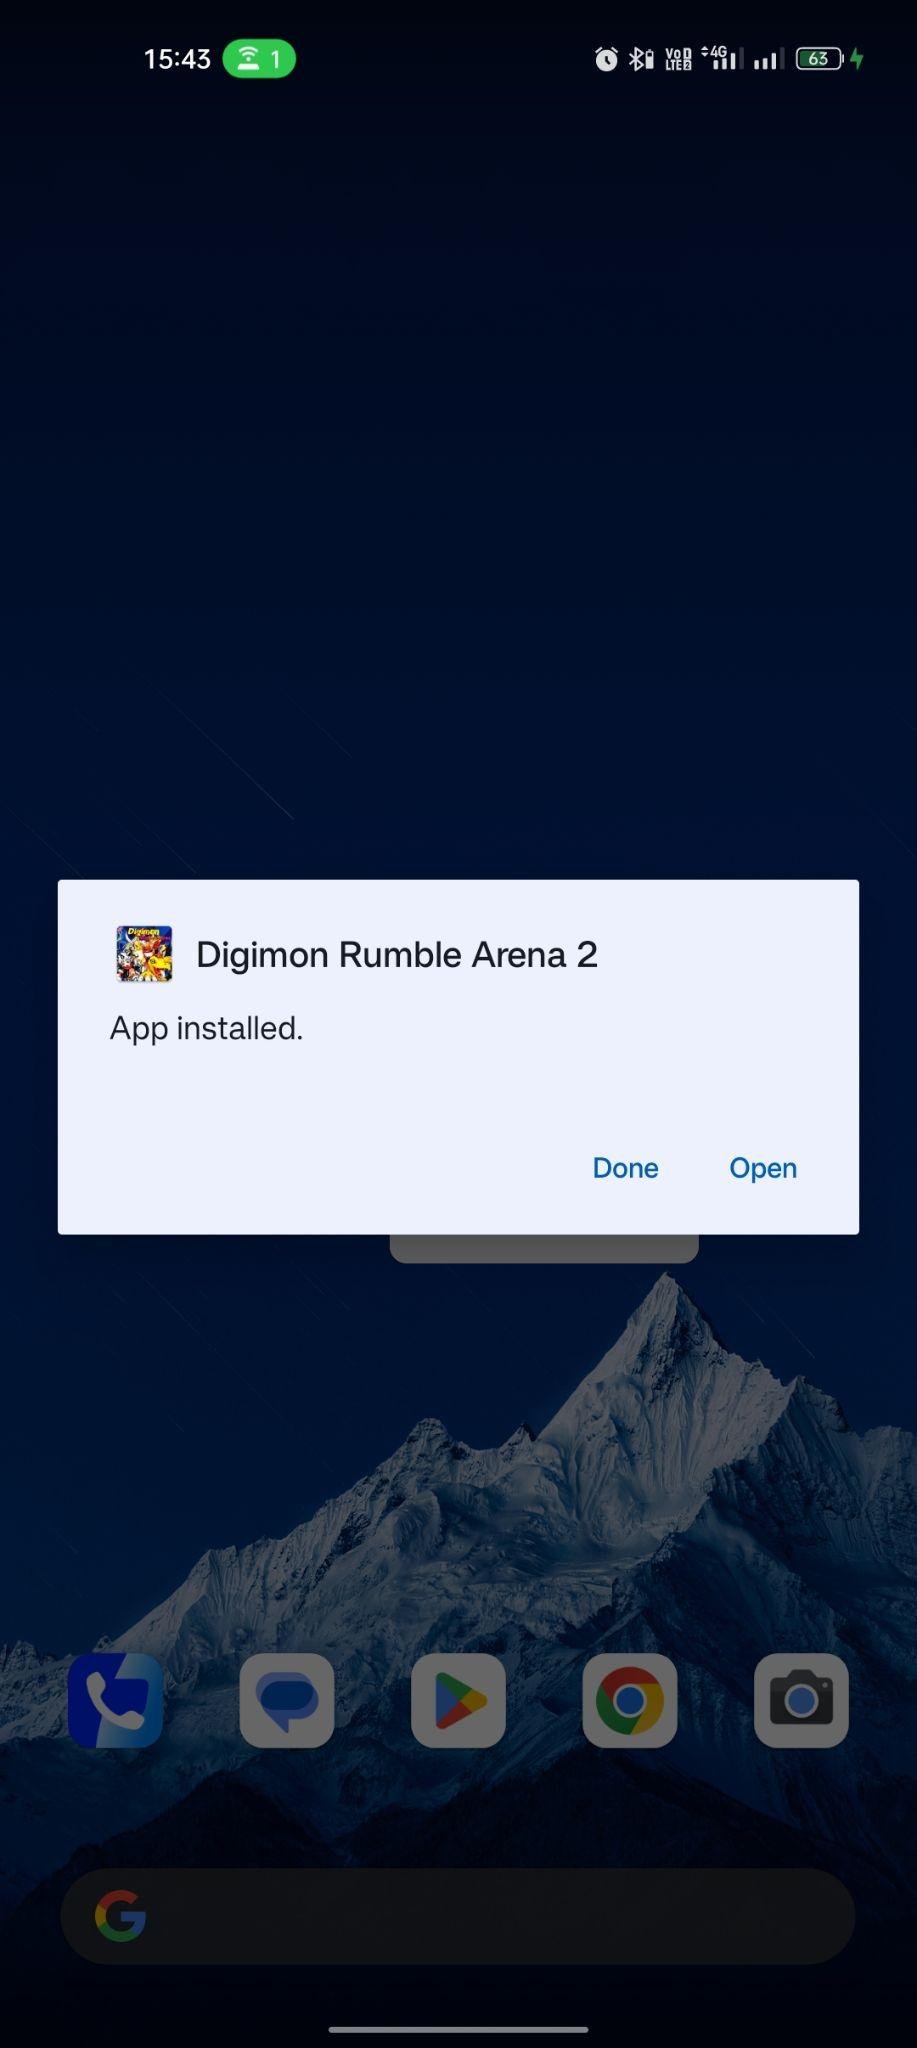 Digimon Rumble Arena 2 apk installed